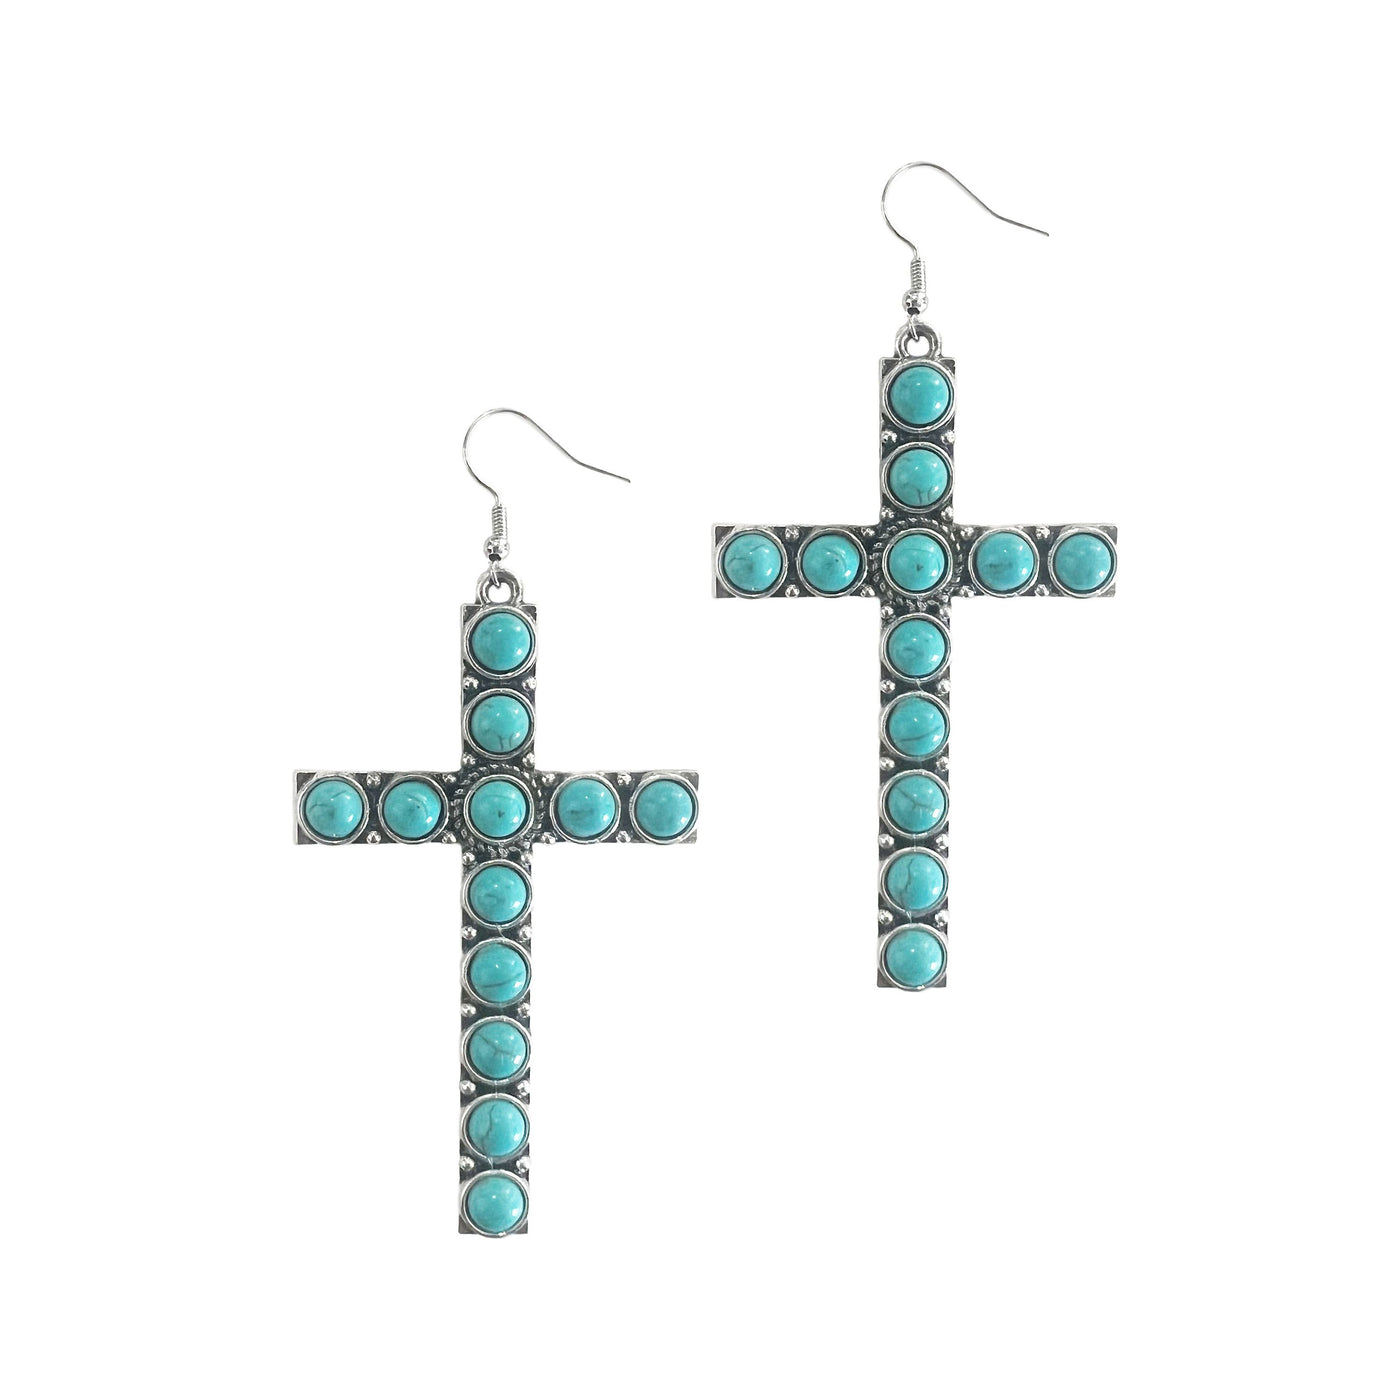 Stone Cross Earrings, Turquoise